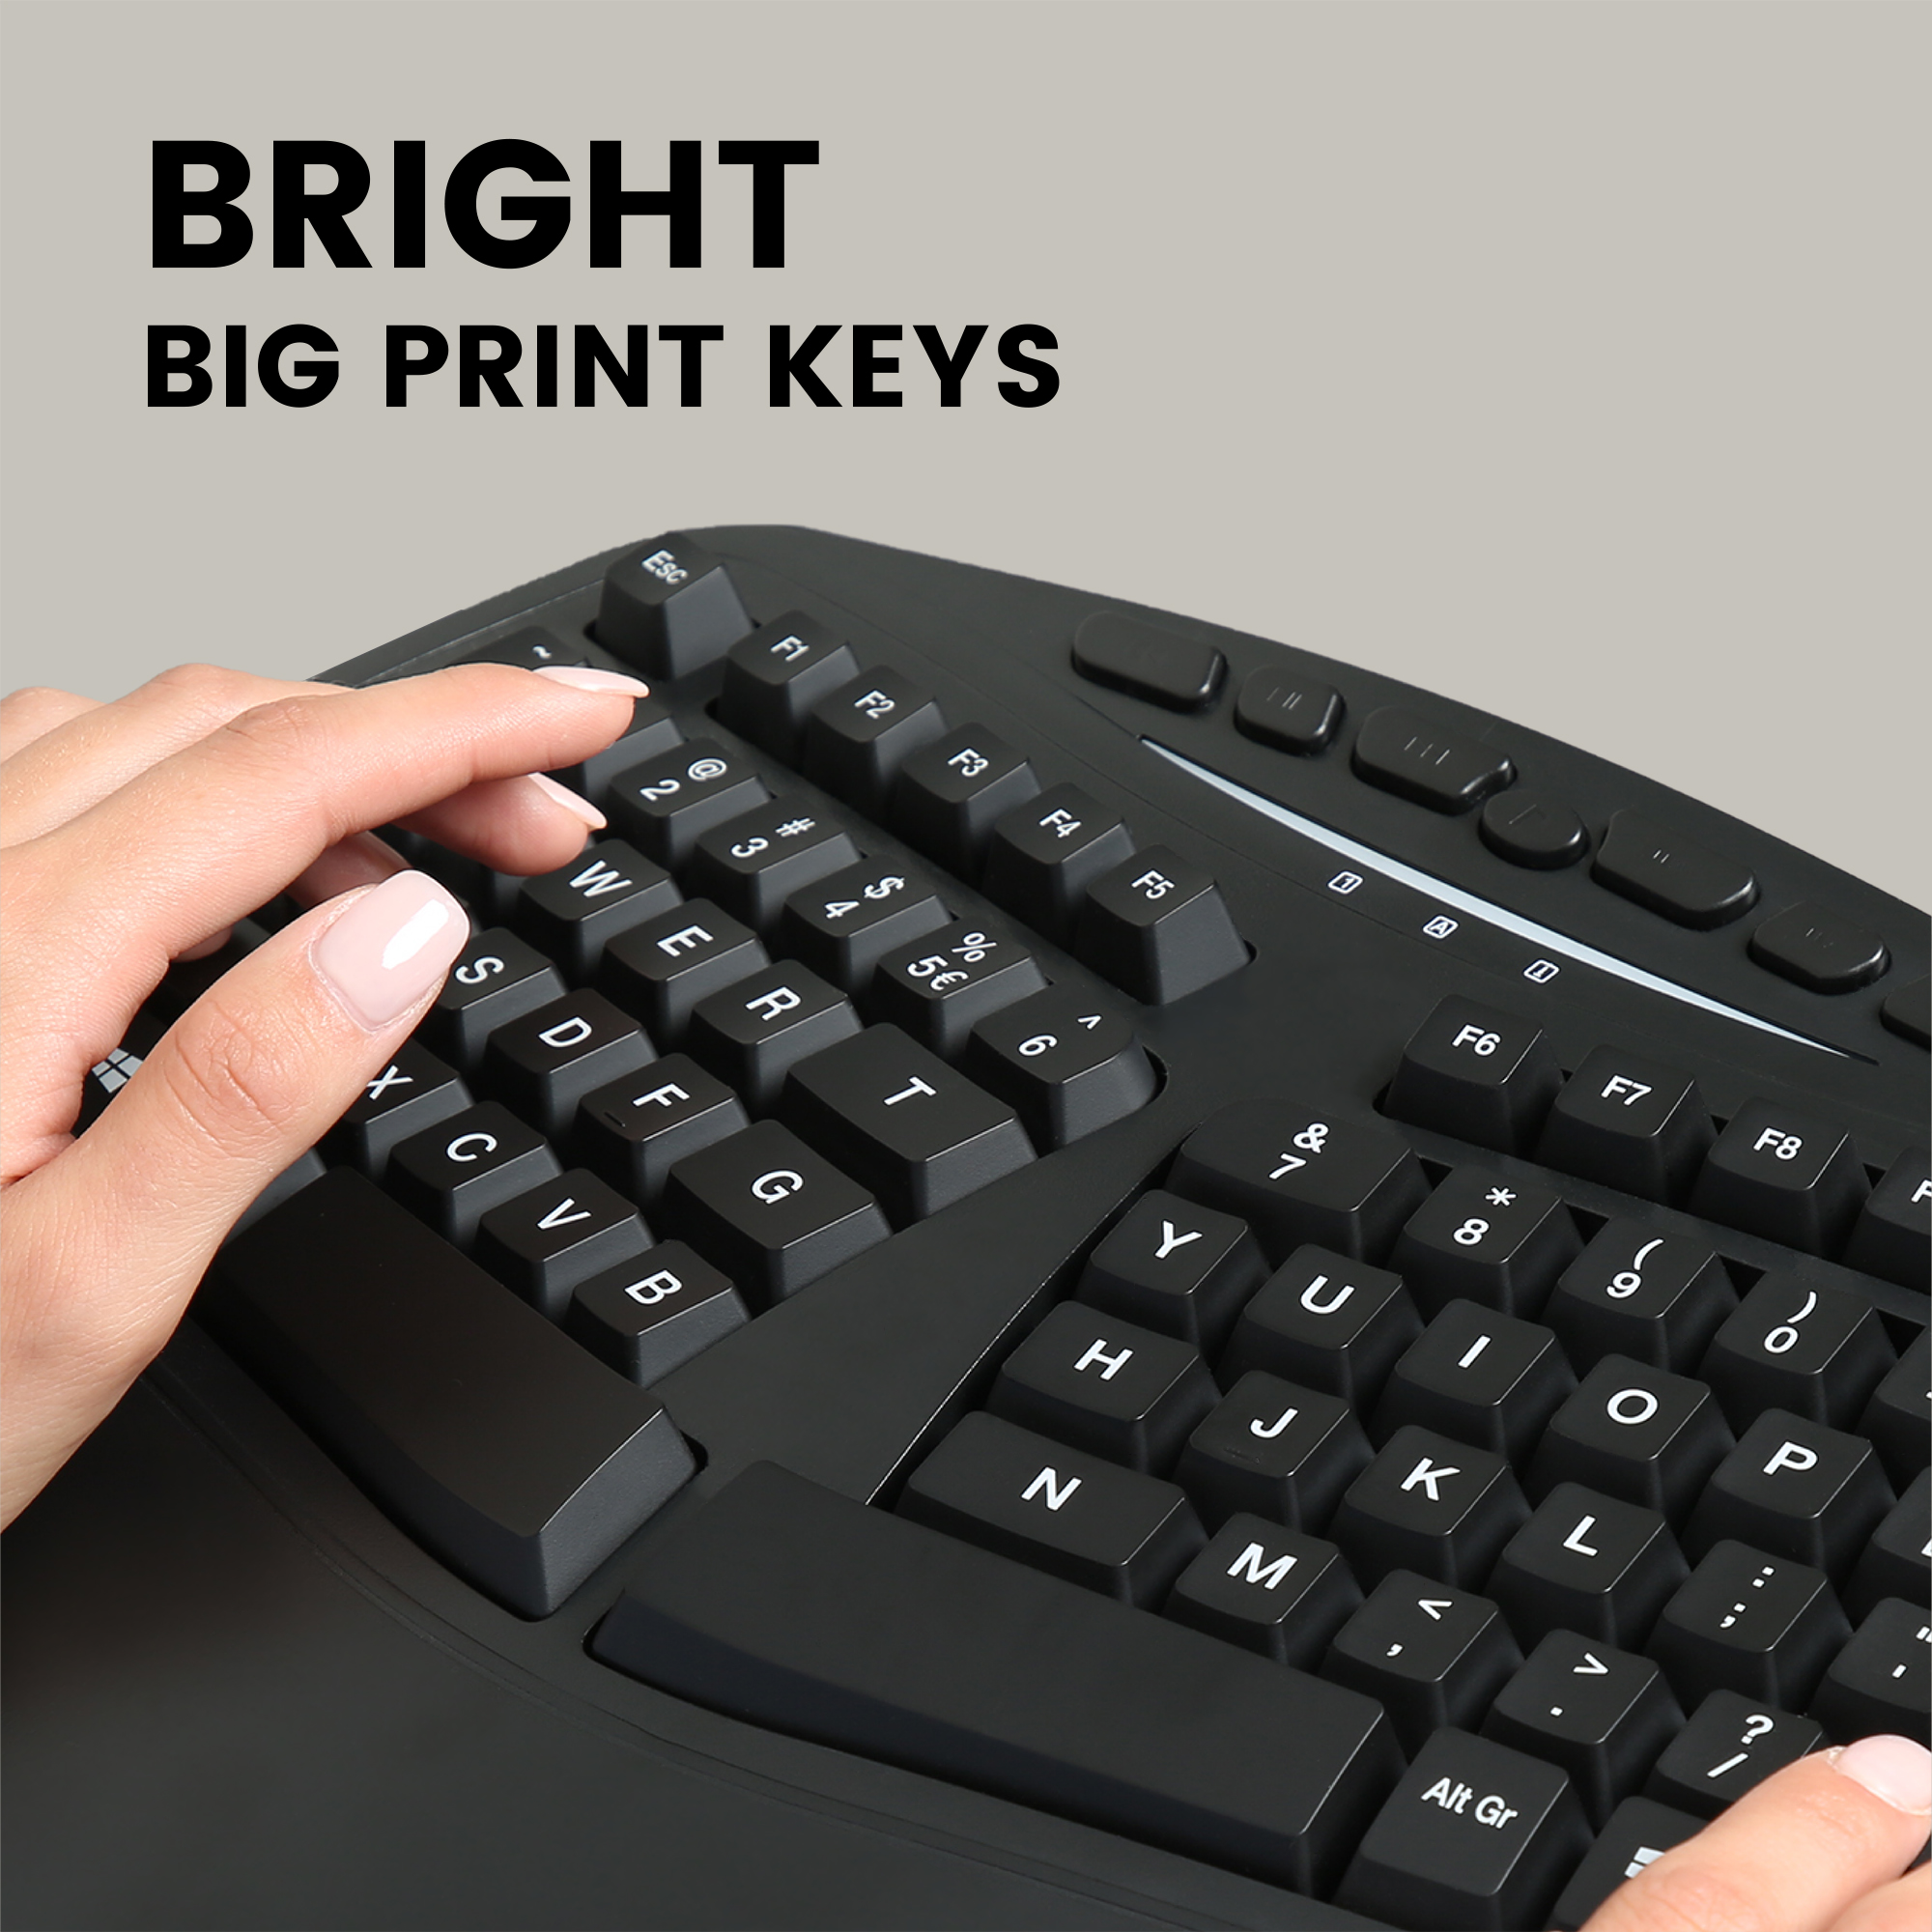 Big print keys